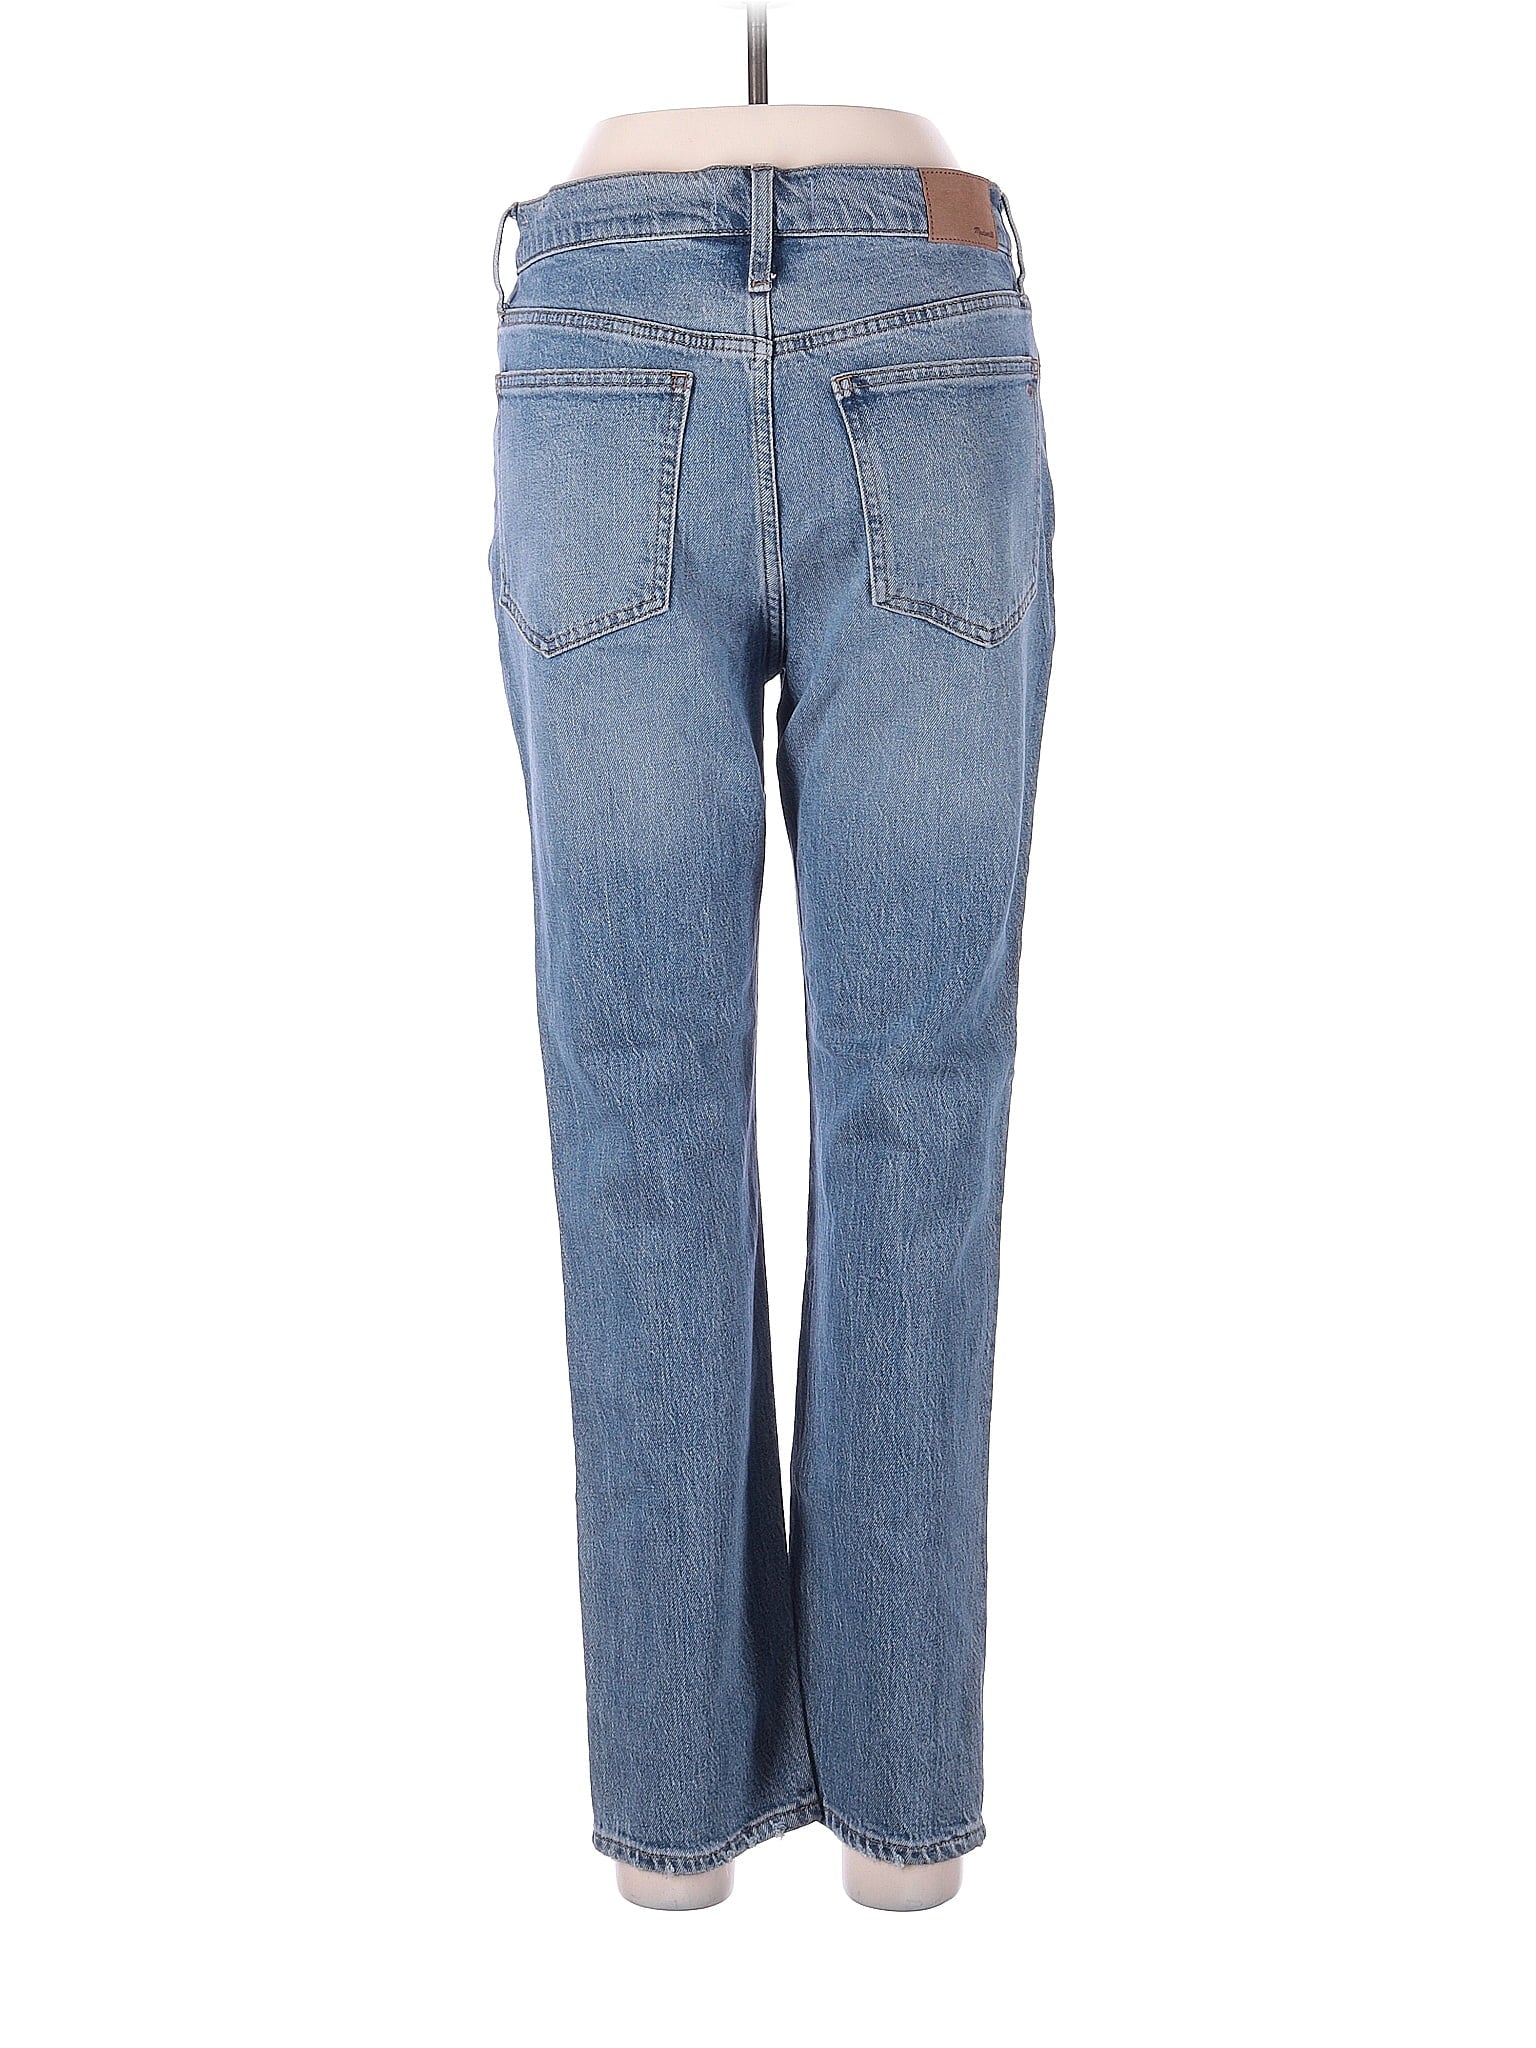 Mid-Rise Boyjeans Jeans in Medium Wash waist size - 28